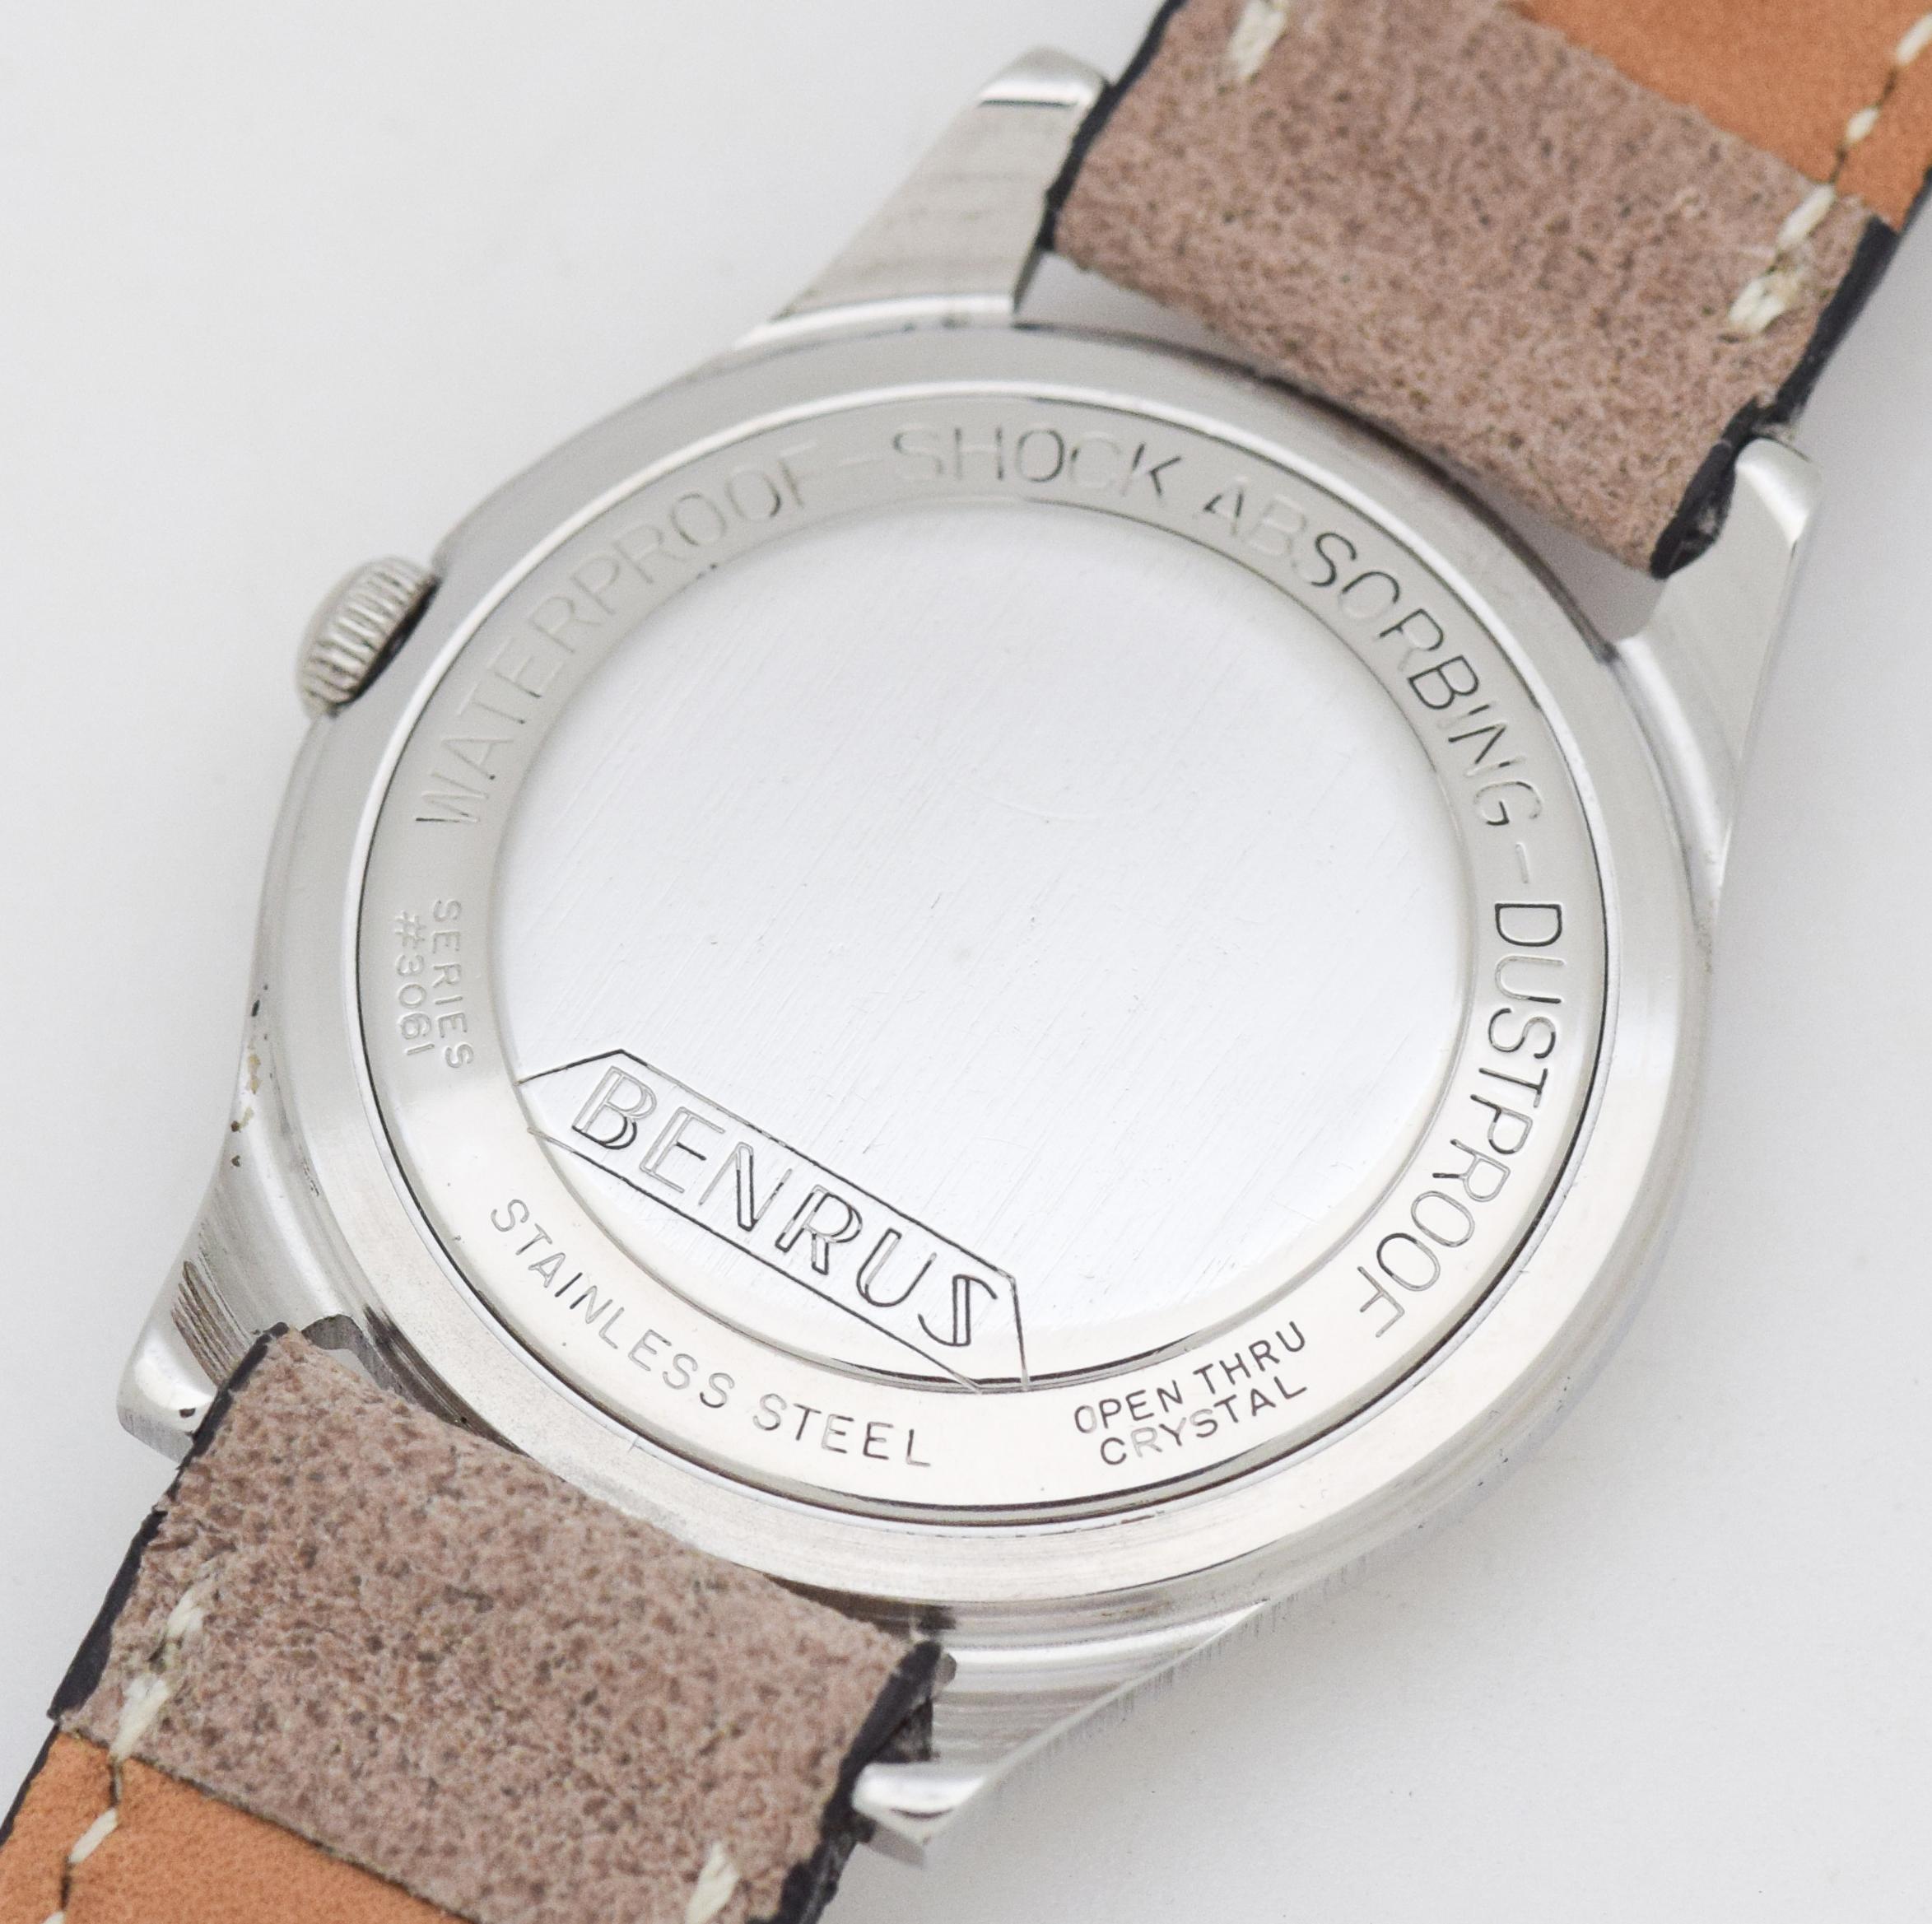 vintage benrus shock absorber watch